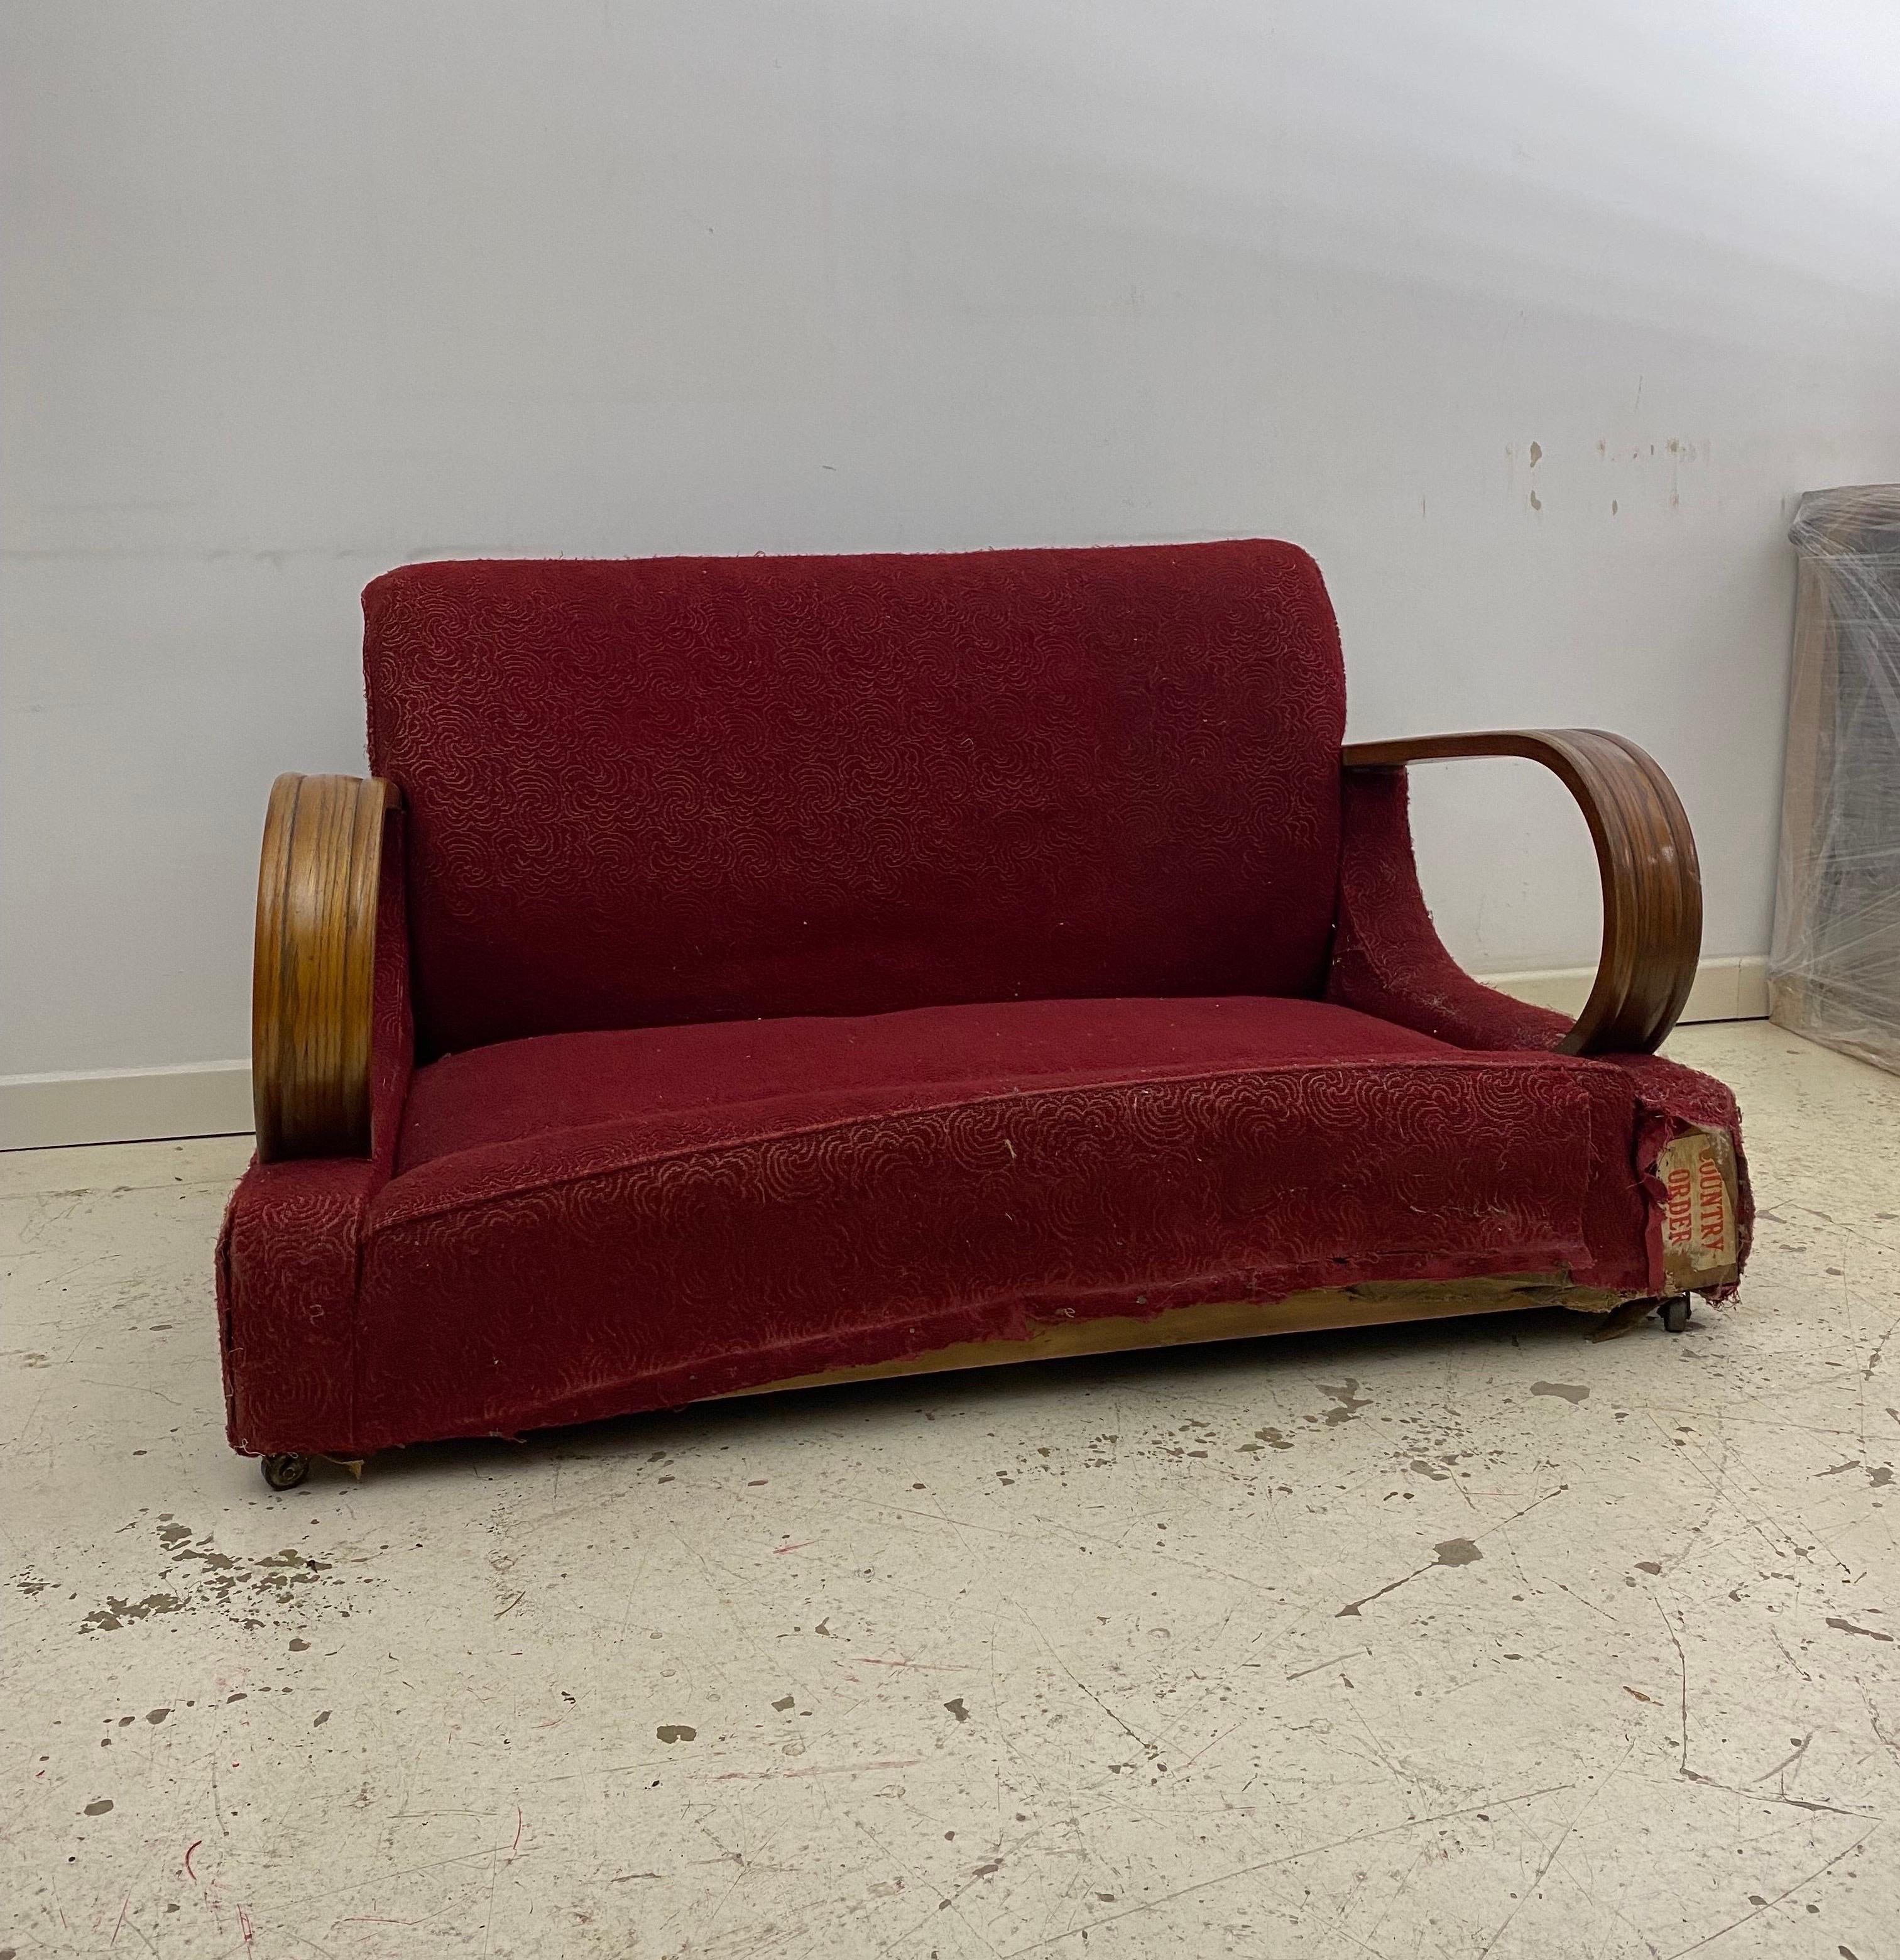 Milieu du XXe siècle Art Deco 1940s Red Two Seater Distressed Sofa Restoration Project As Seen Poirot en vente